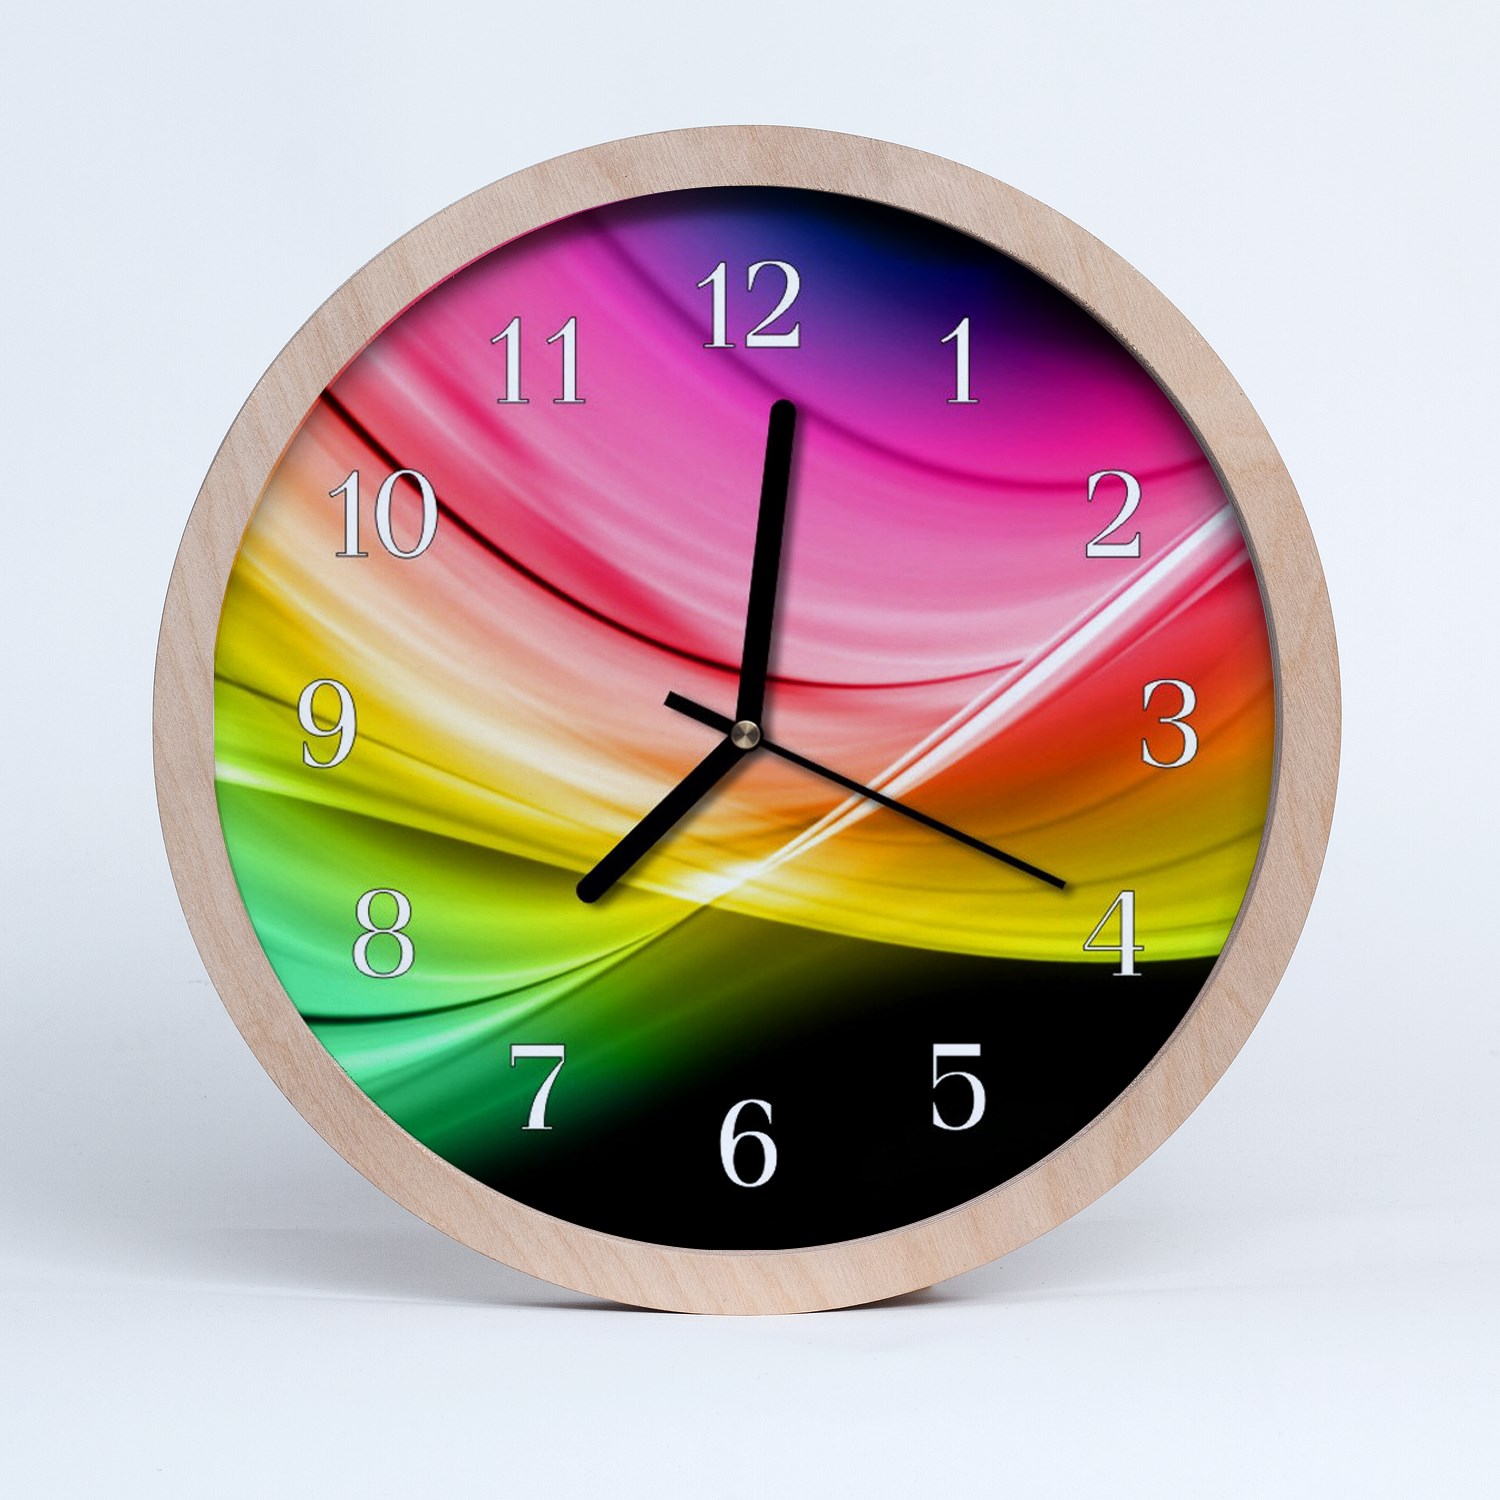 Tulup wooden clock 25fi cm wall clock kitchen clock - Art abstract lines